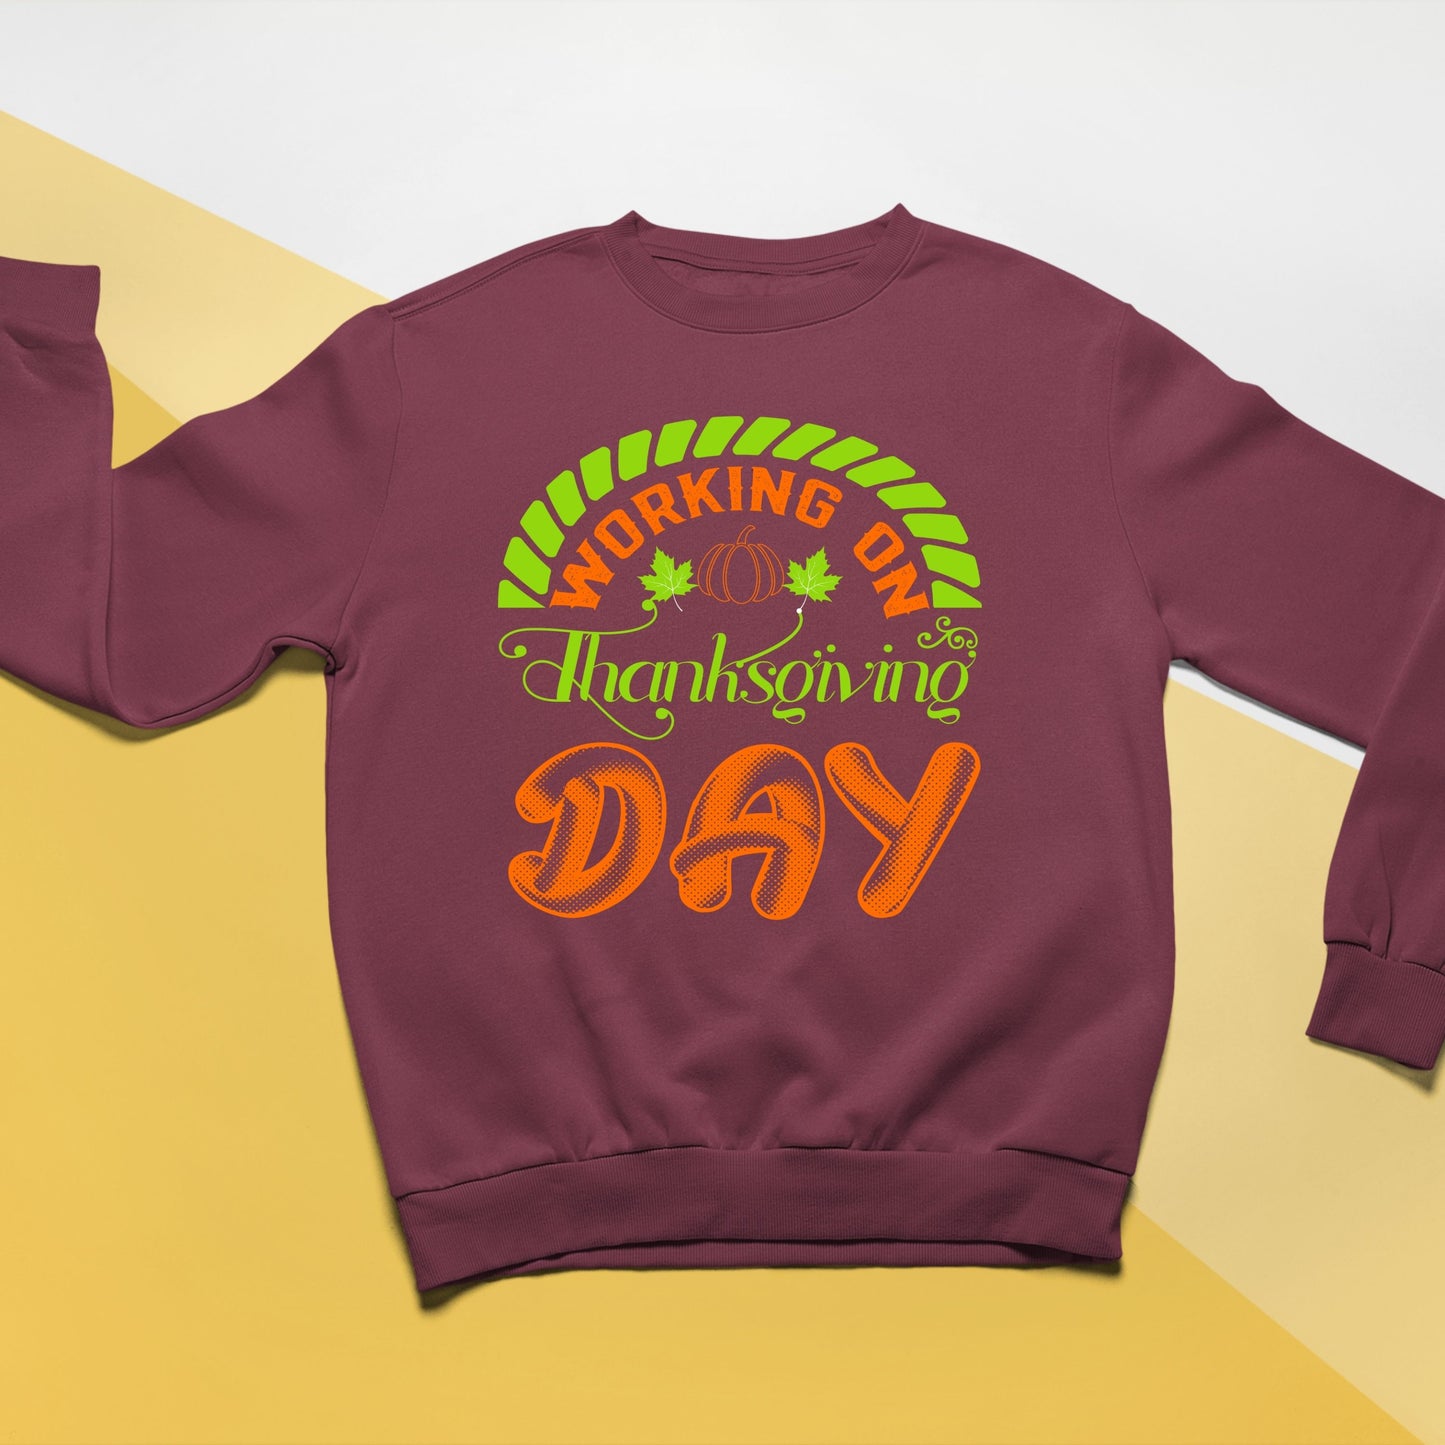 Working on Thanksgiving Sweatshirt, Thanksgiving Sweatshirt, Thanksgiving Sweater for Kid, Thanksgiving Gift, Cute Thanksgiving